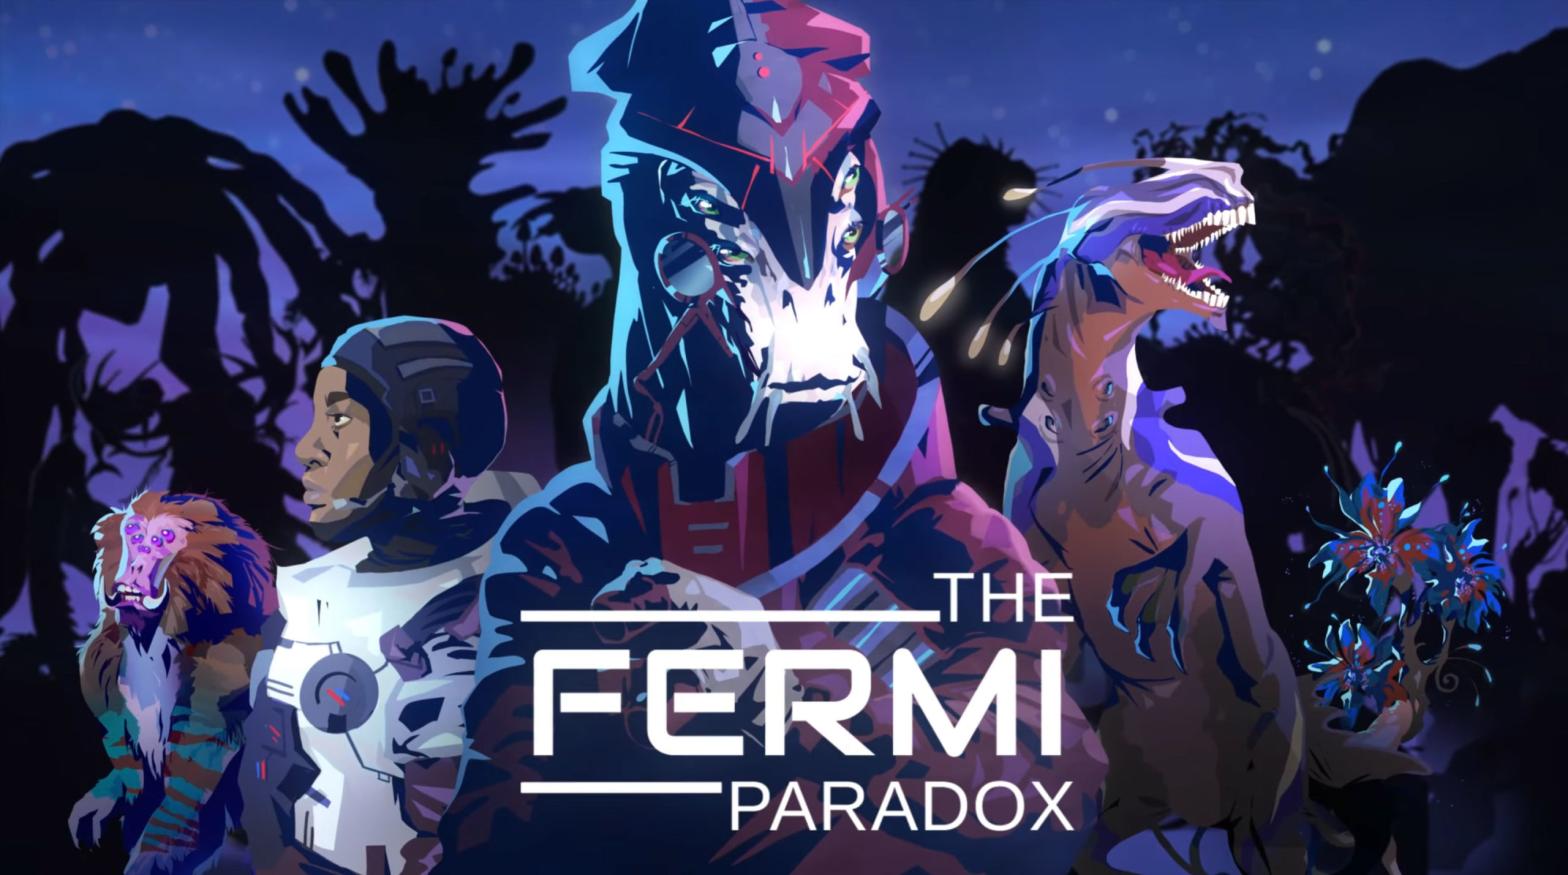 Image: The Fermi Paradox